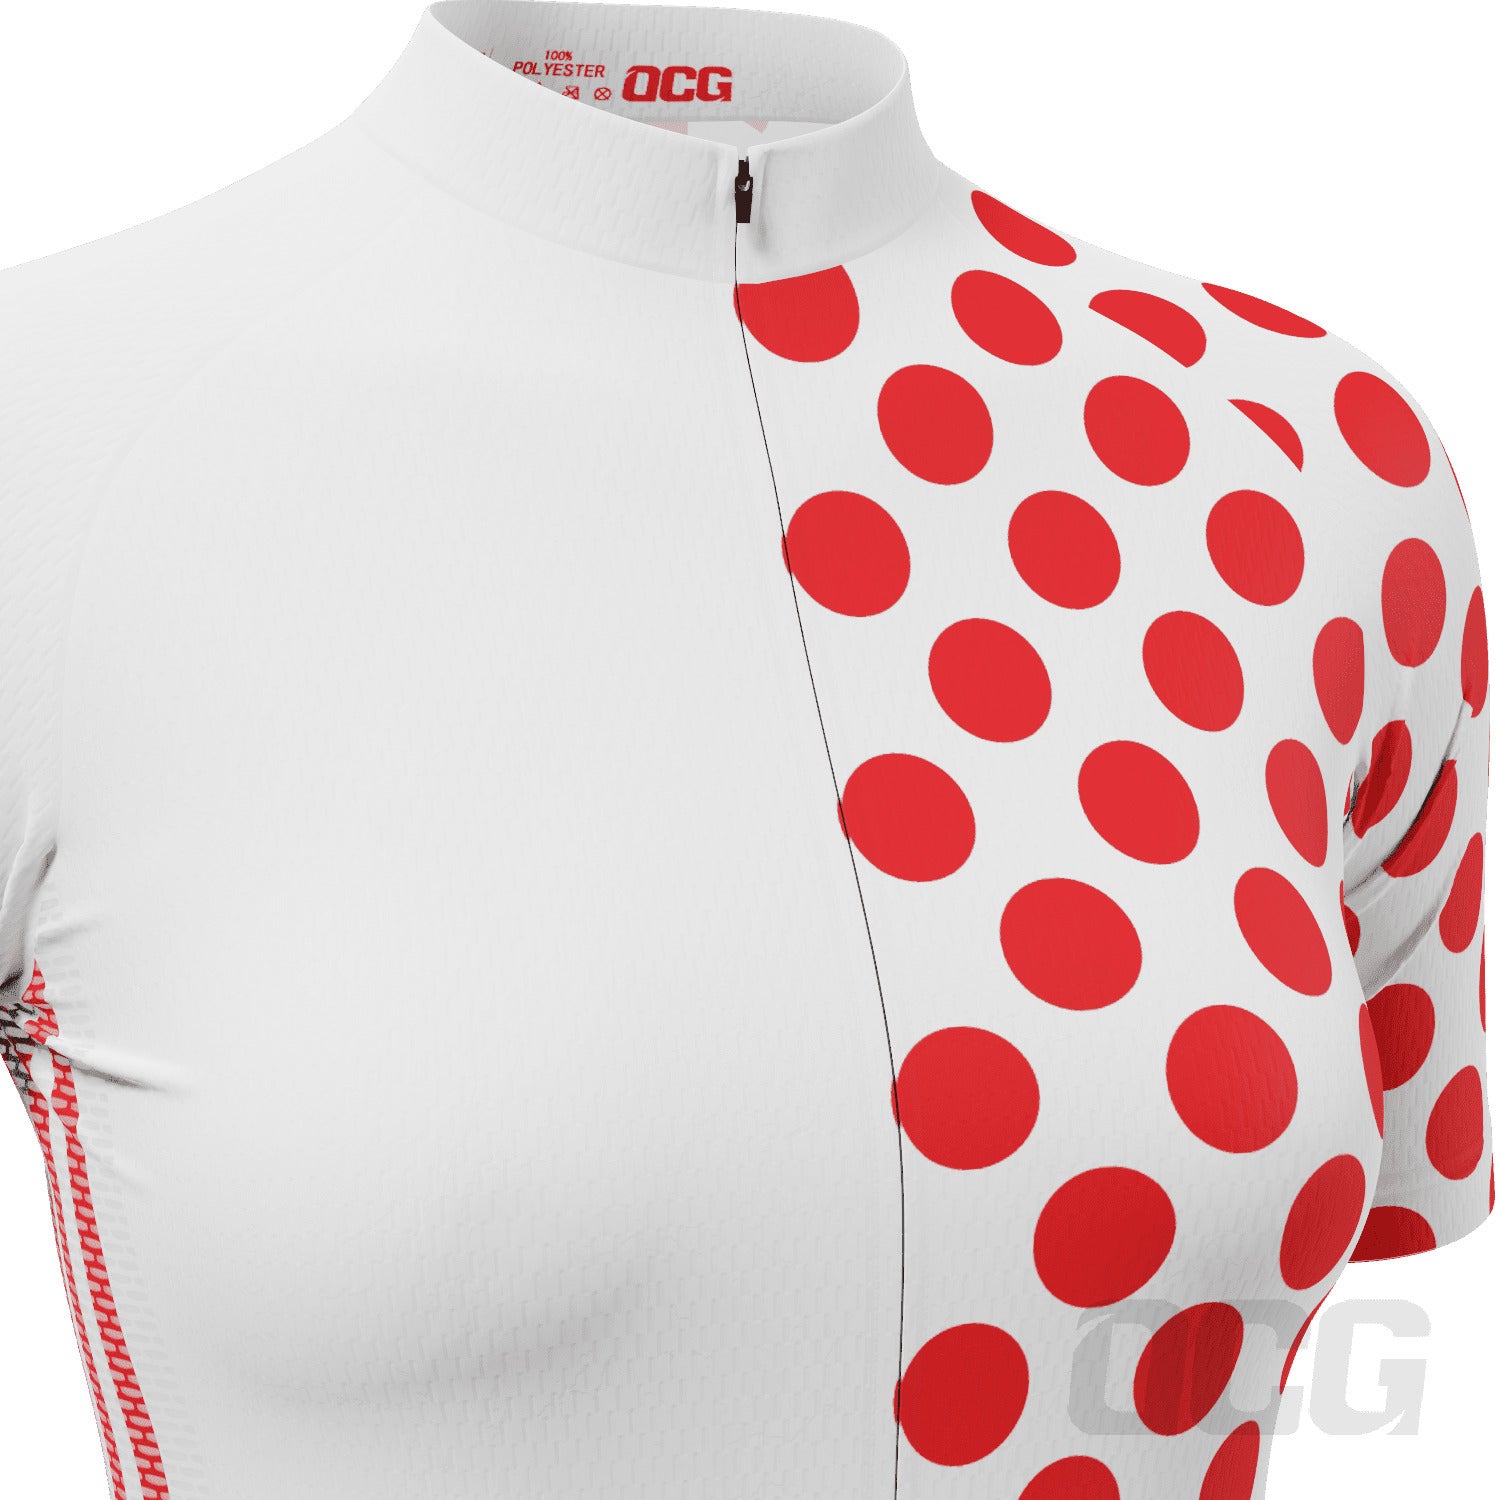 Women's Tour de France King of The Mountain Short Sleeve Cycling Jersey